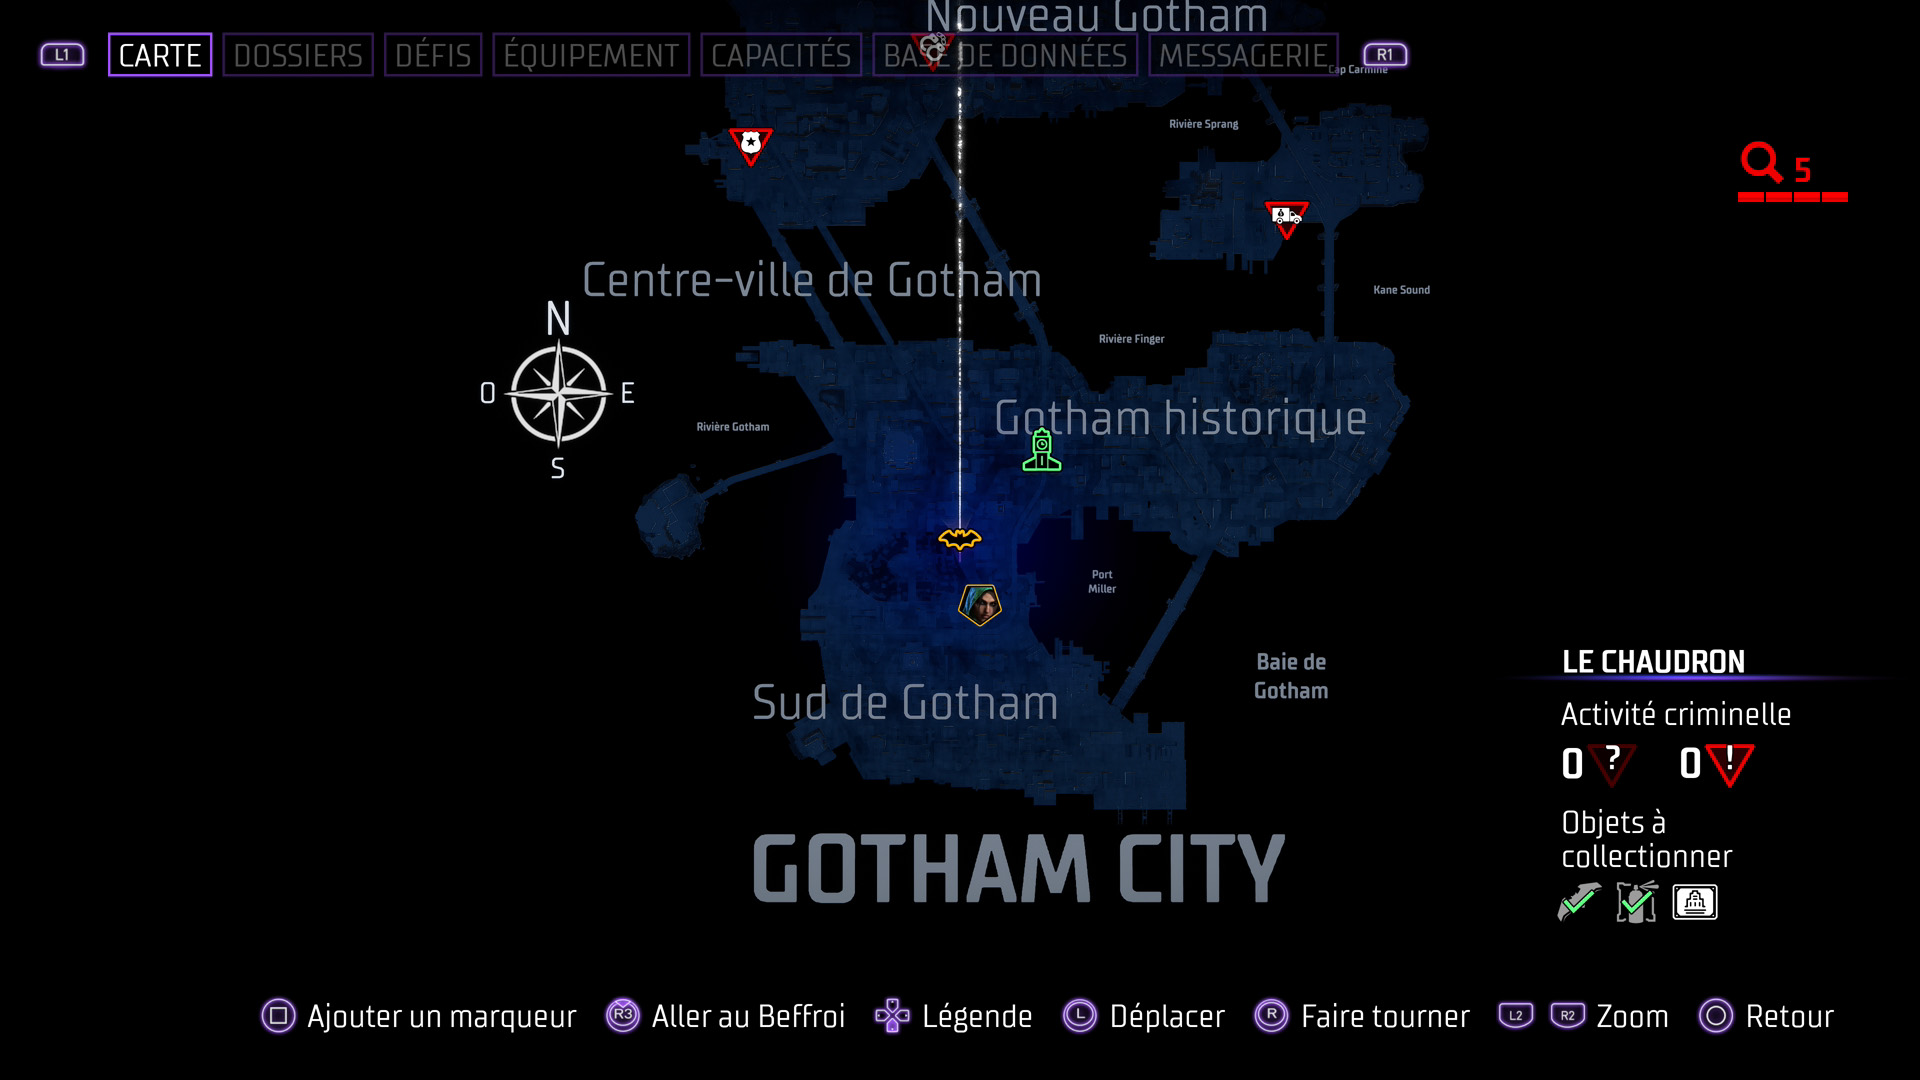 Les batarangs - sud de gotham - le chaudron - big belly - gotham knights